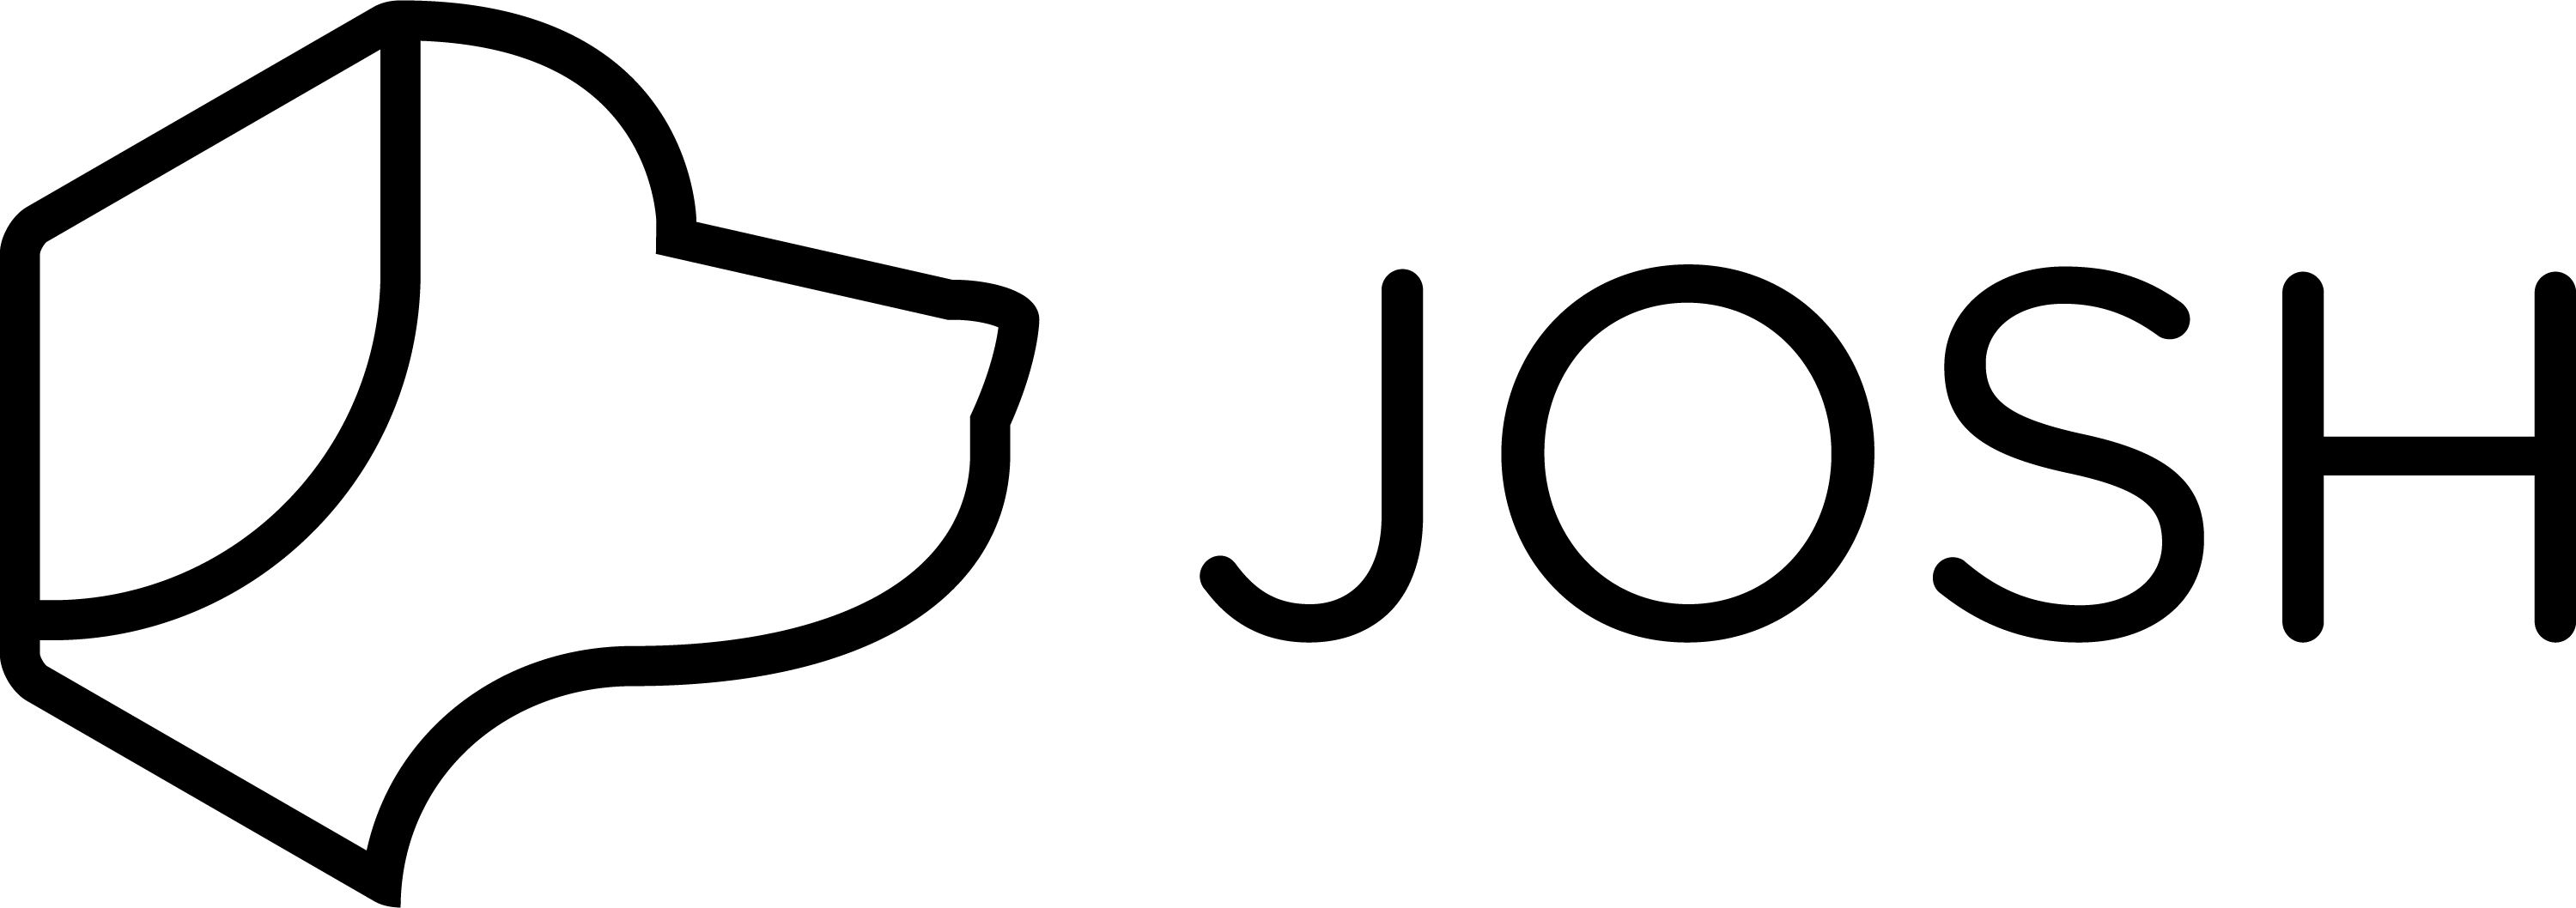 josh-logo-horizontal-stroked-black-3000